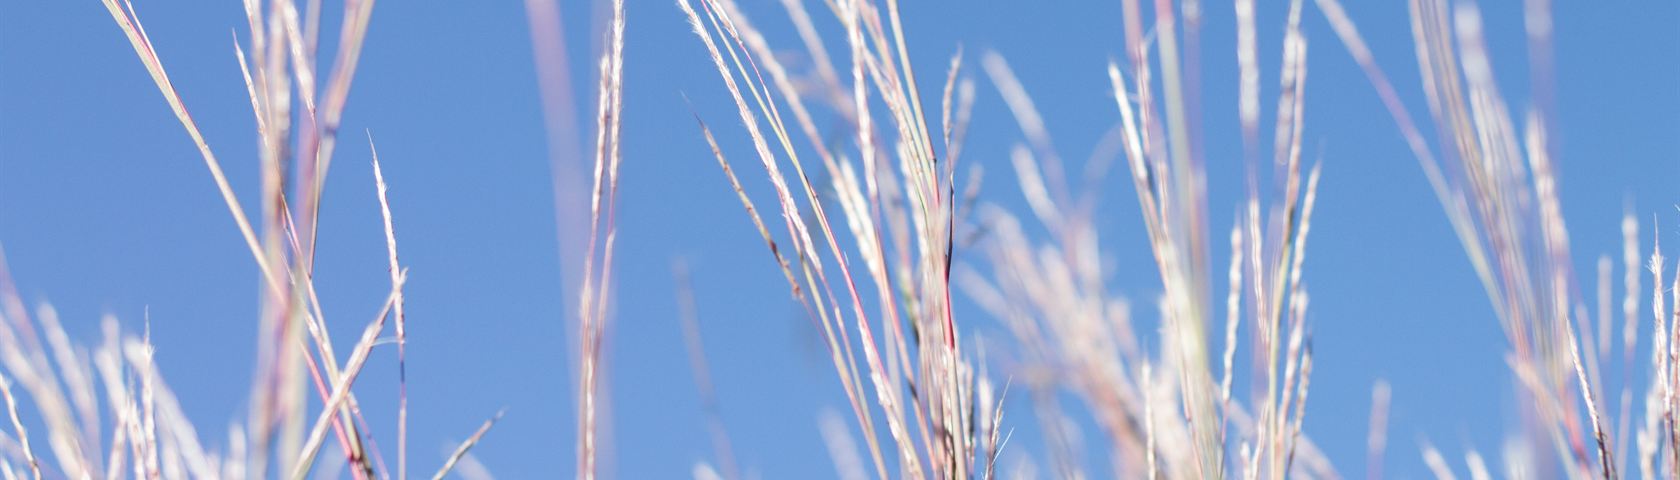 Wheat Against the Sky